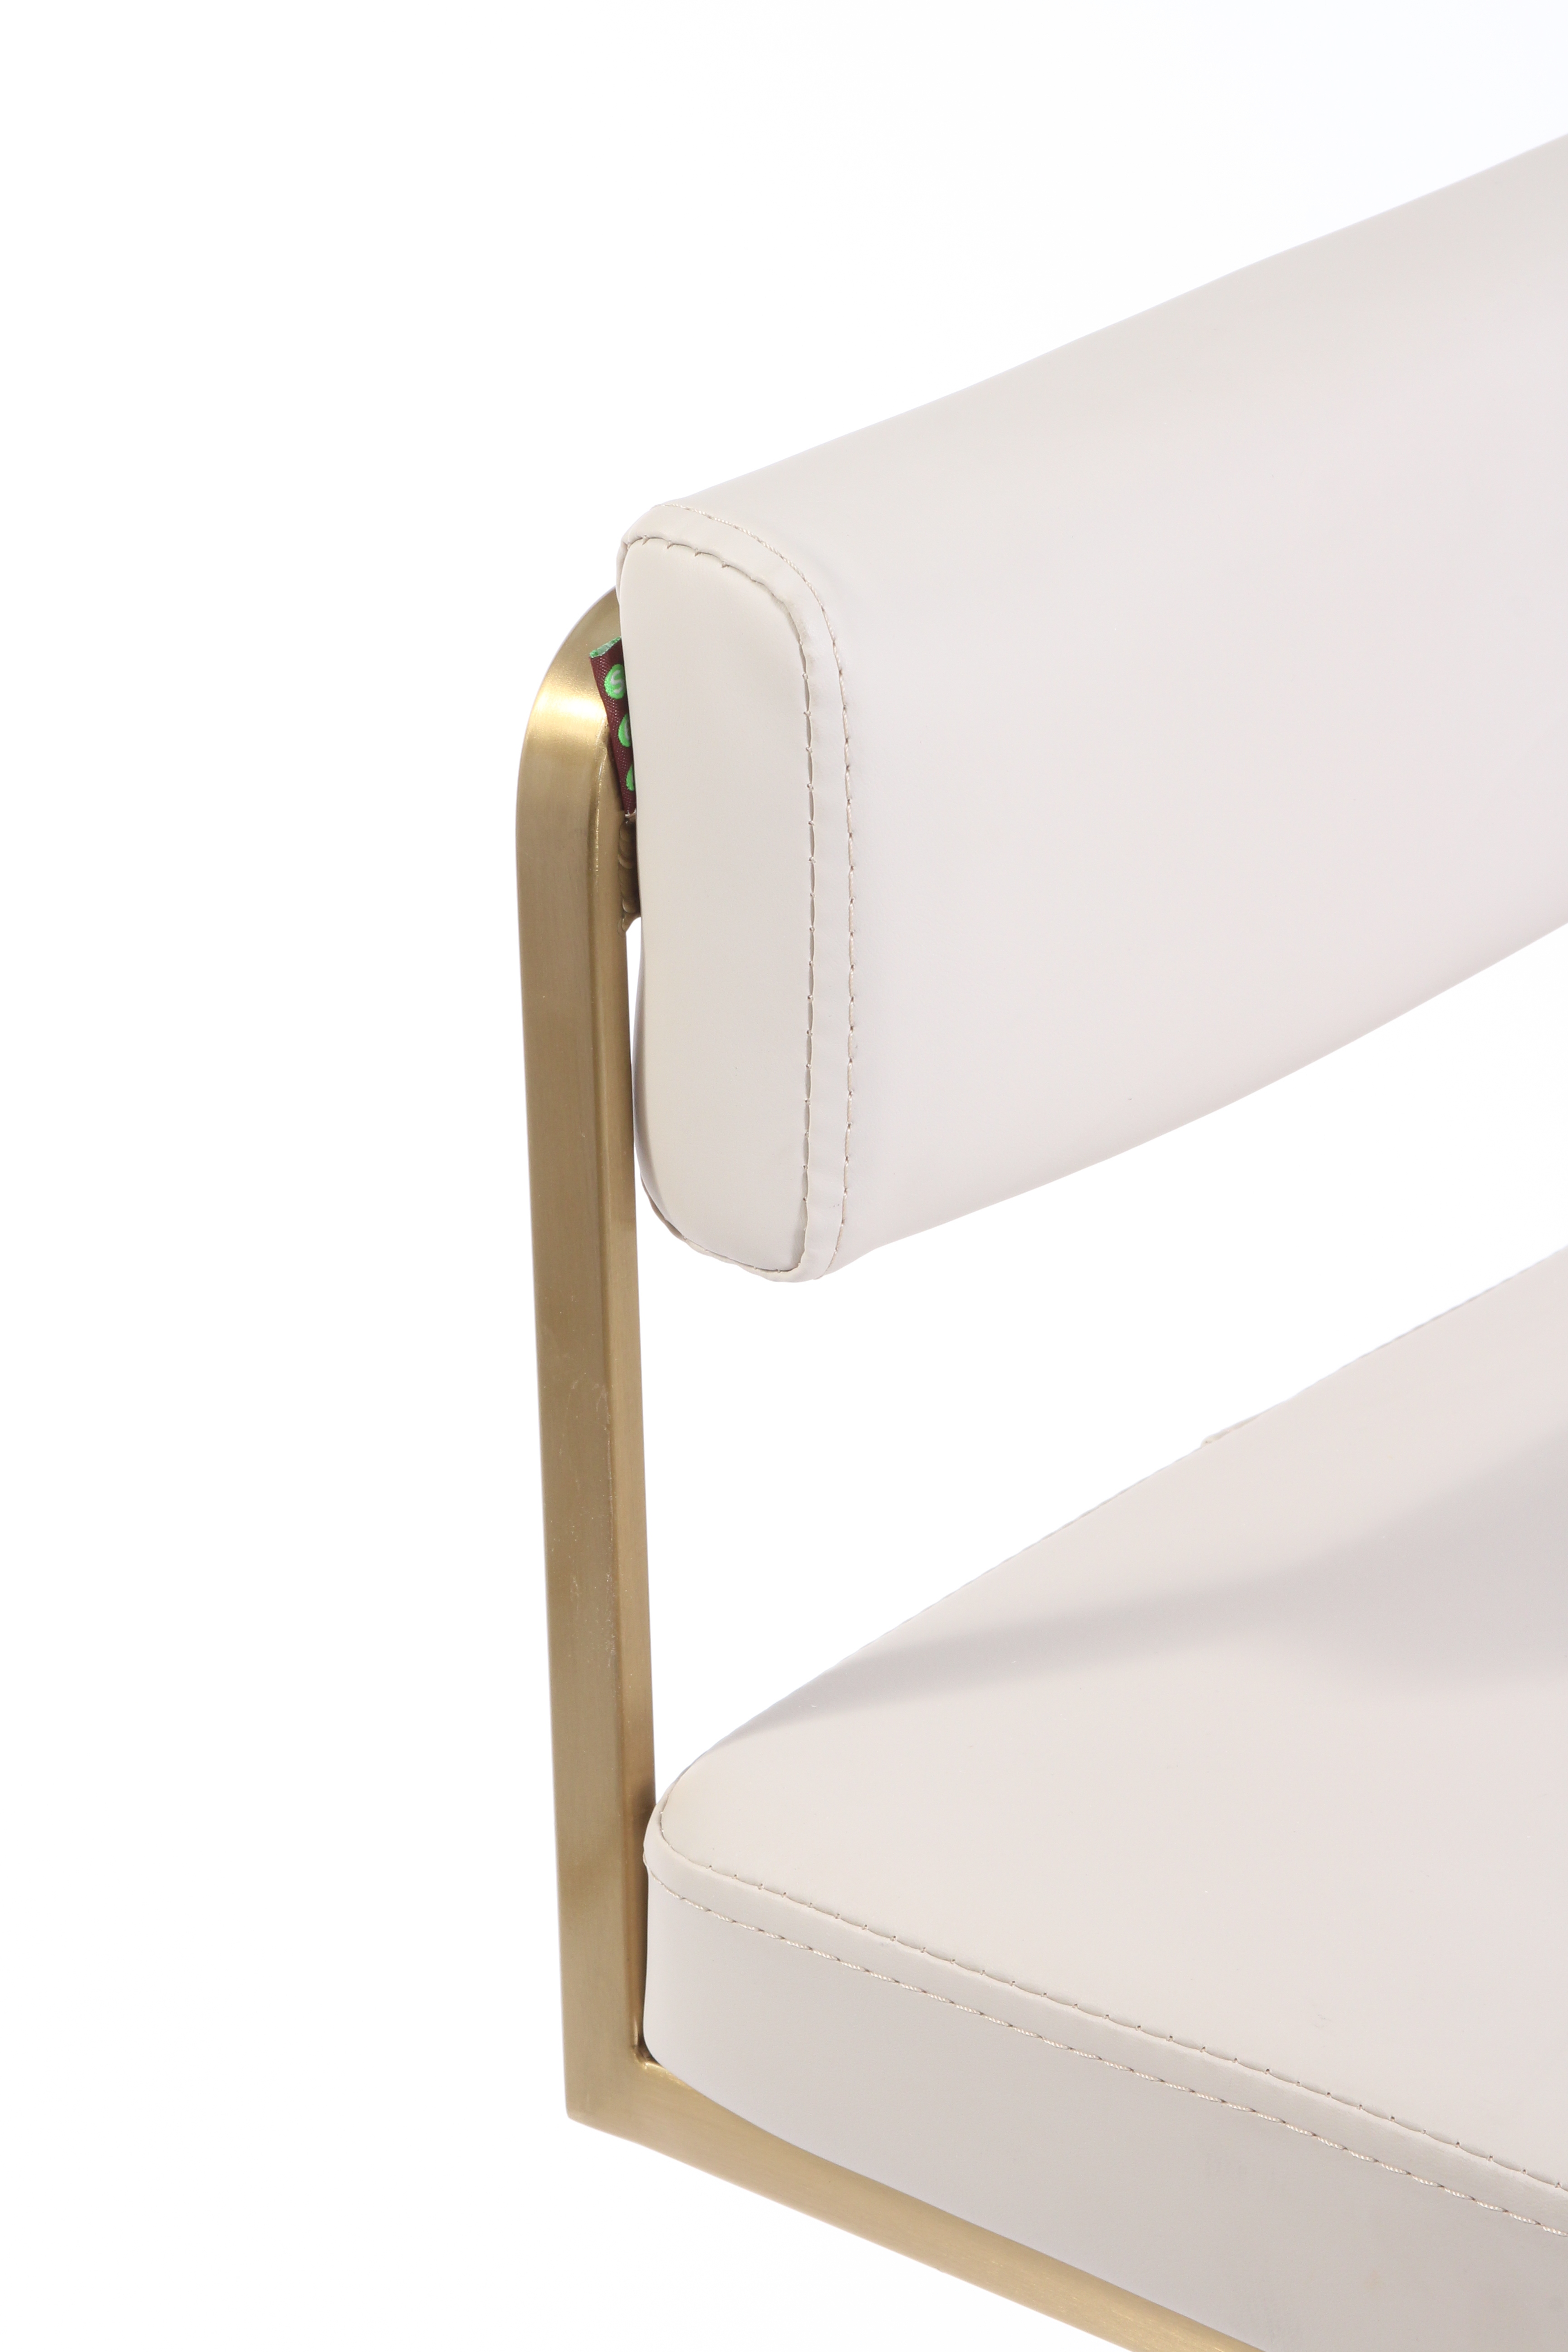 The Lotti Salon Stool with Backrest  - Ivory & Gold by SEC